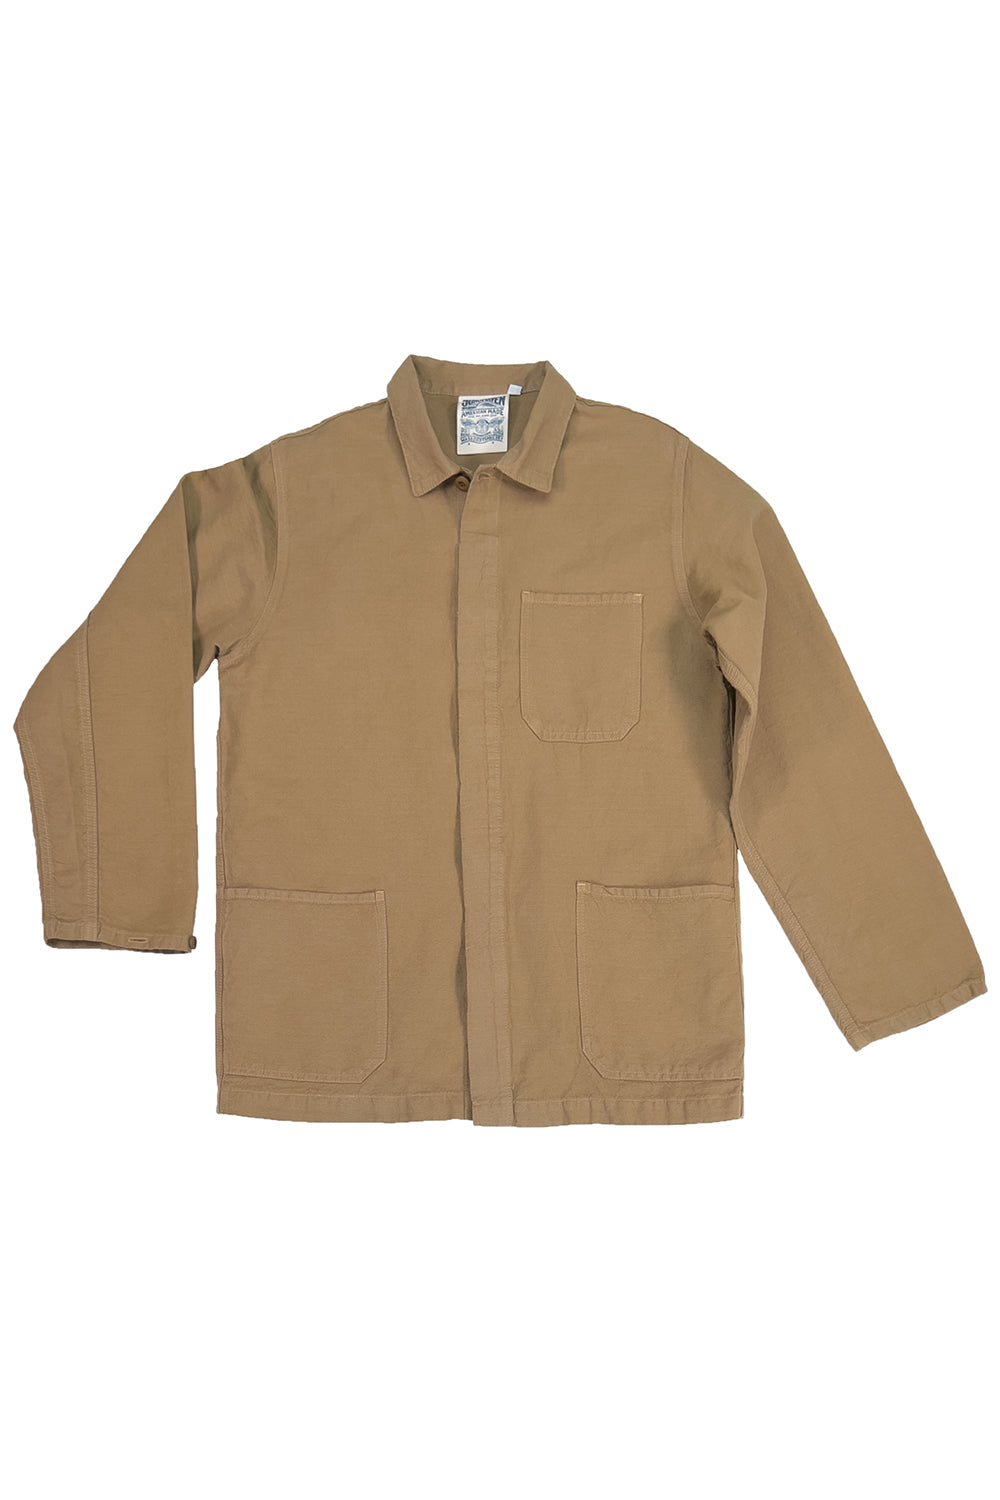 Cascade Jacket | Jungmaven Hemp Clothing & Accessories / Color: Coyote